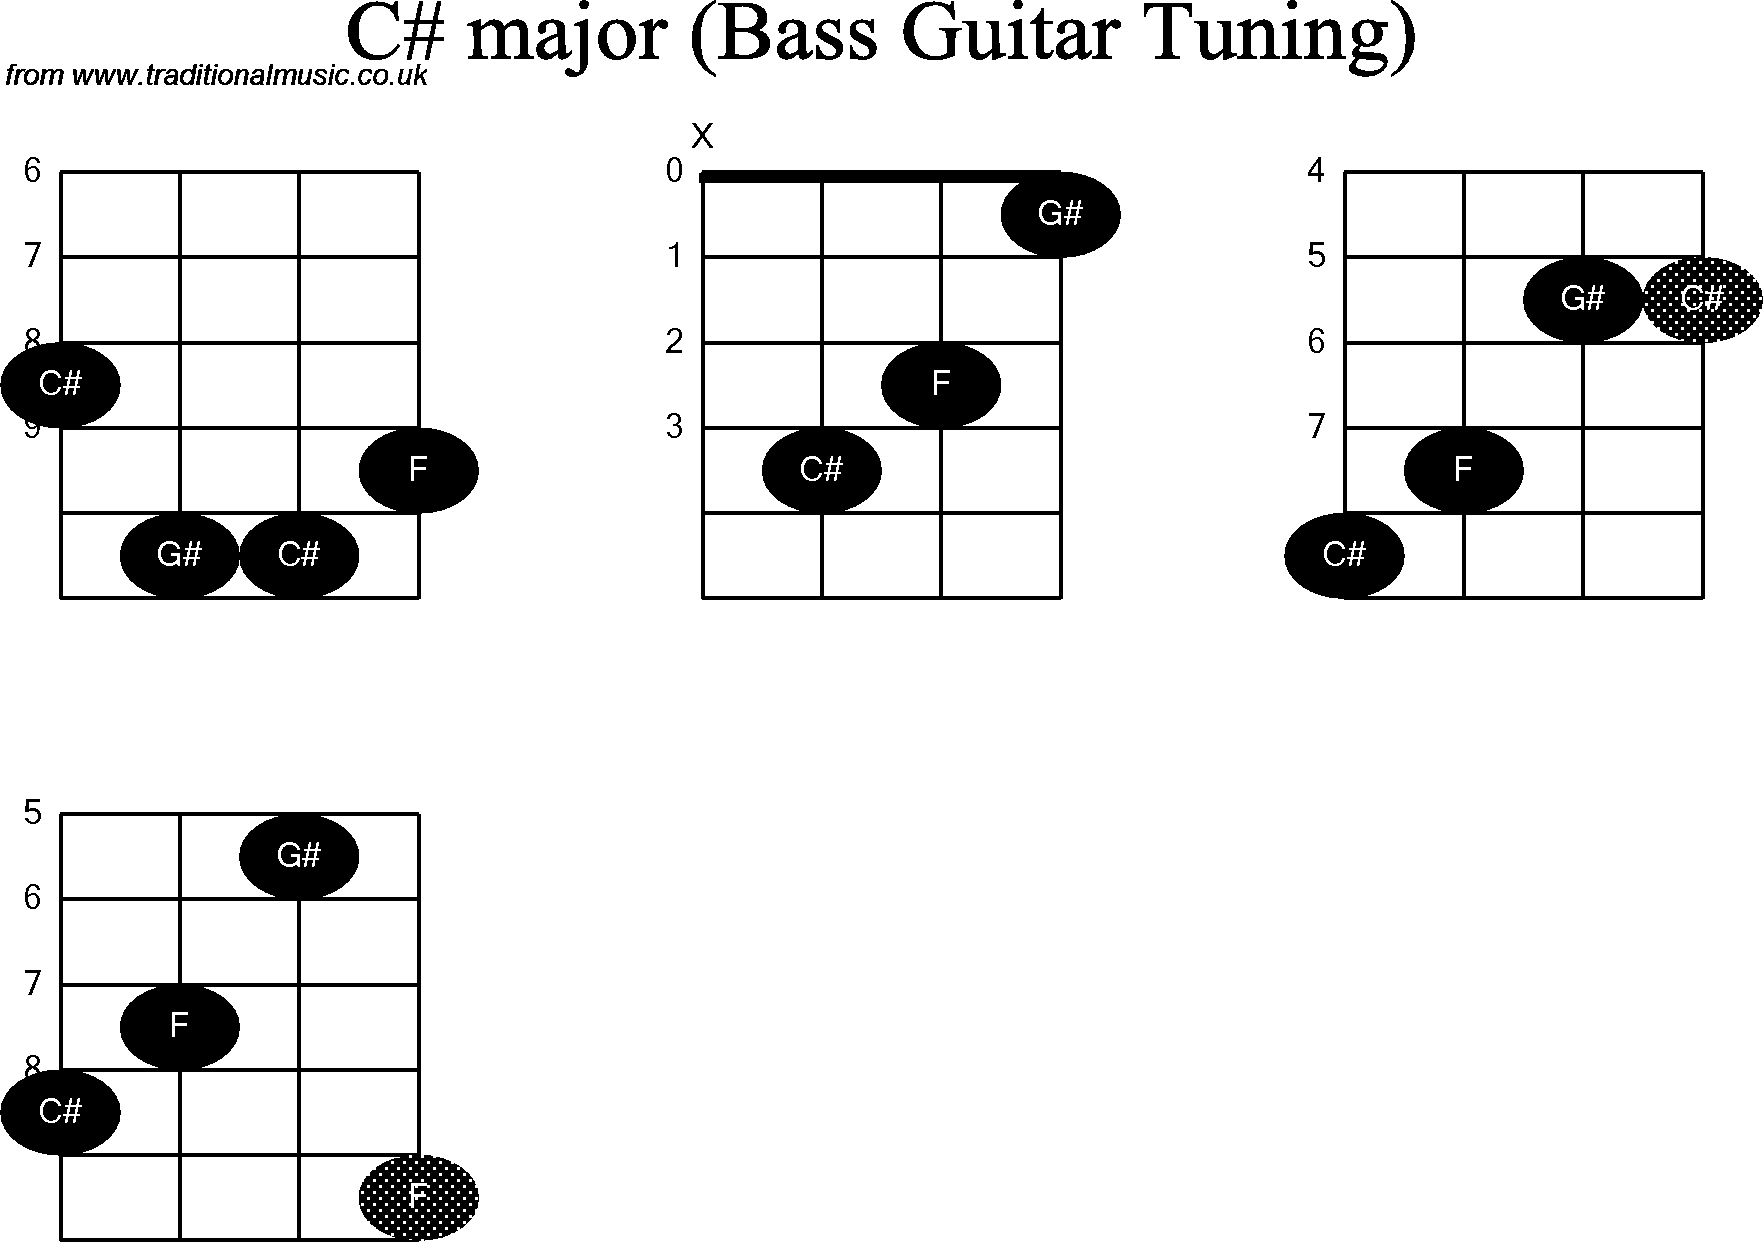 Bass Guitar chord charts for: C Sharp